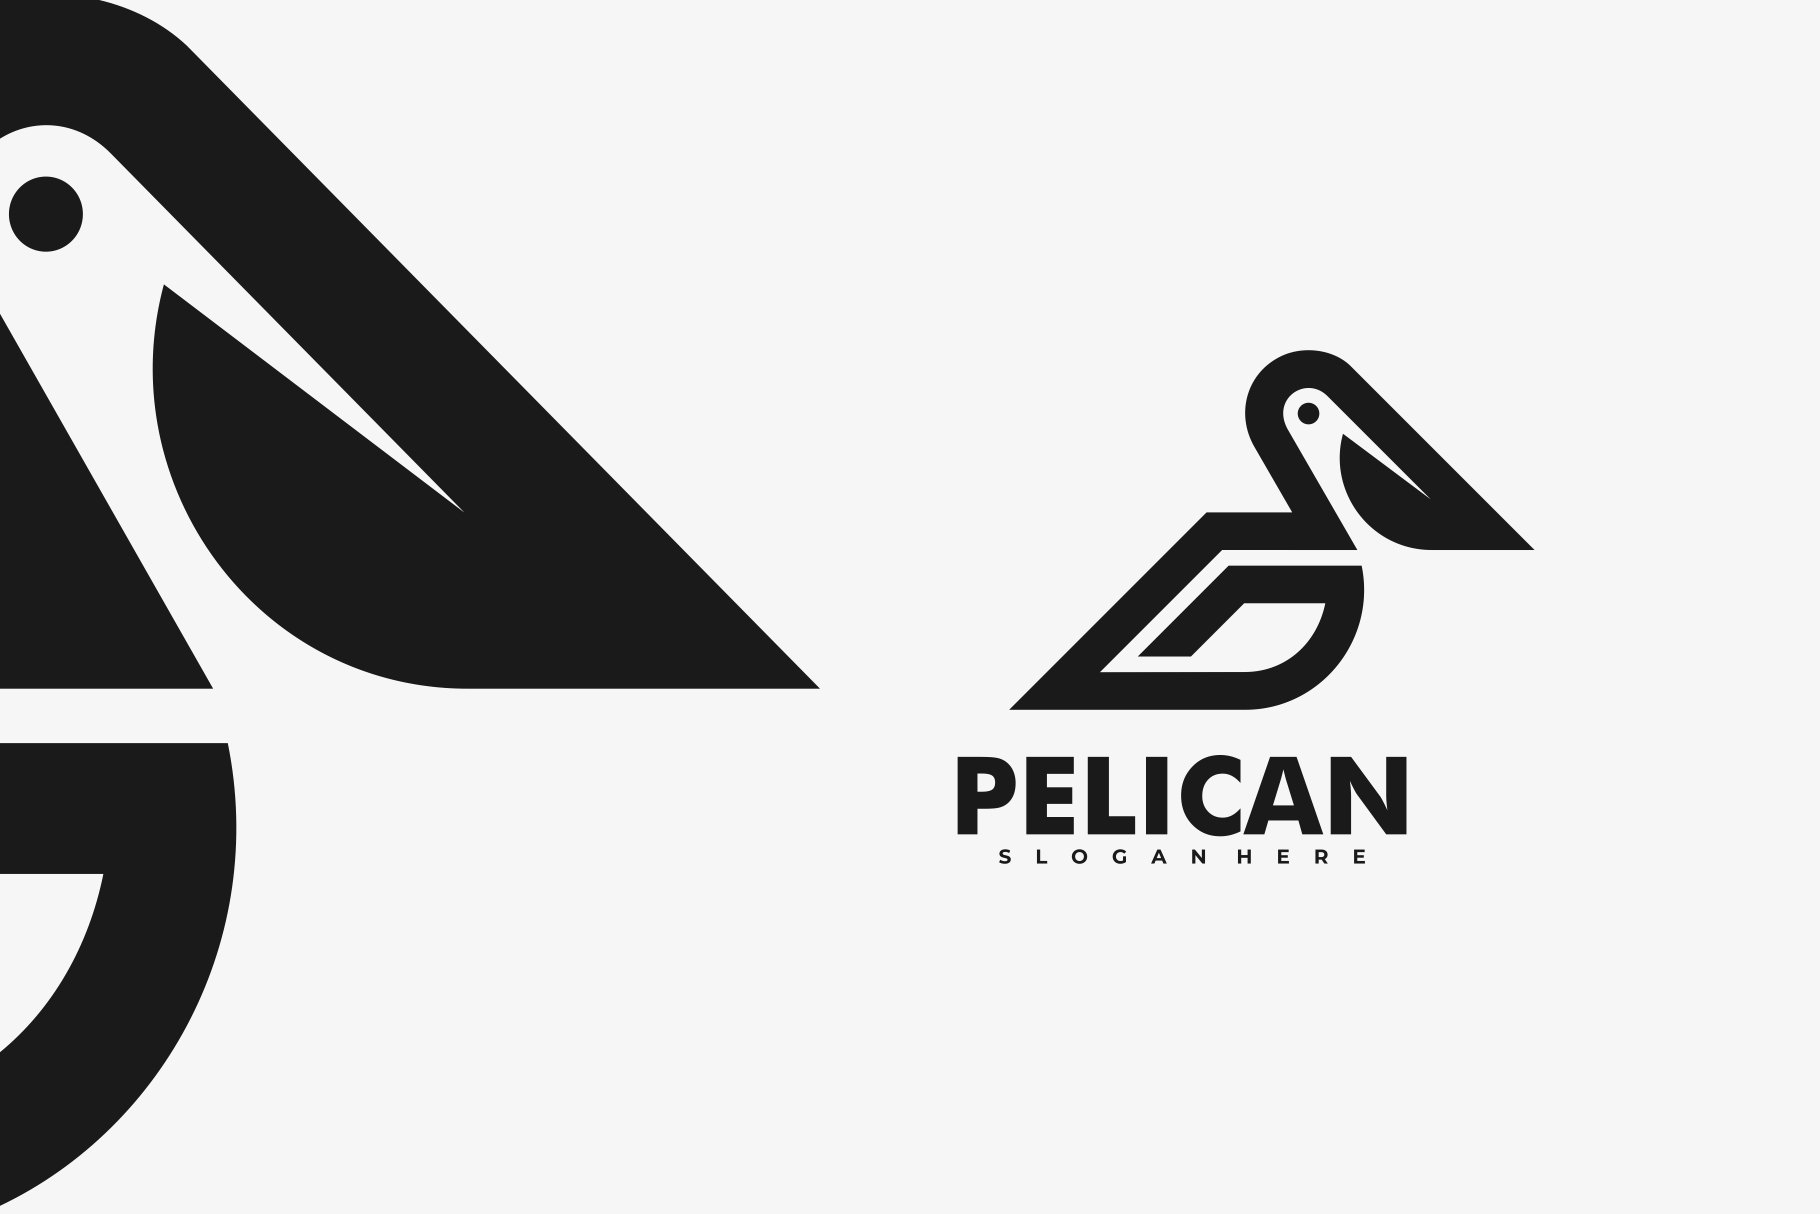 Pelican Line Art Logo cover image.